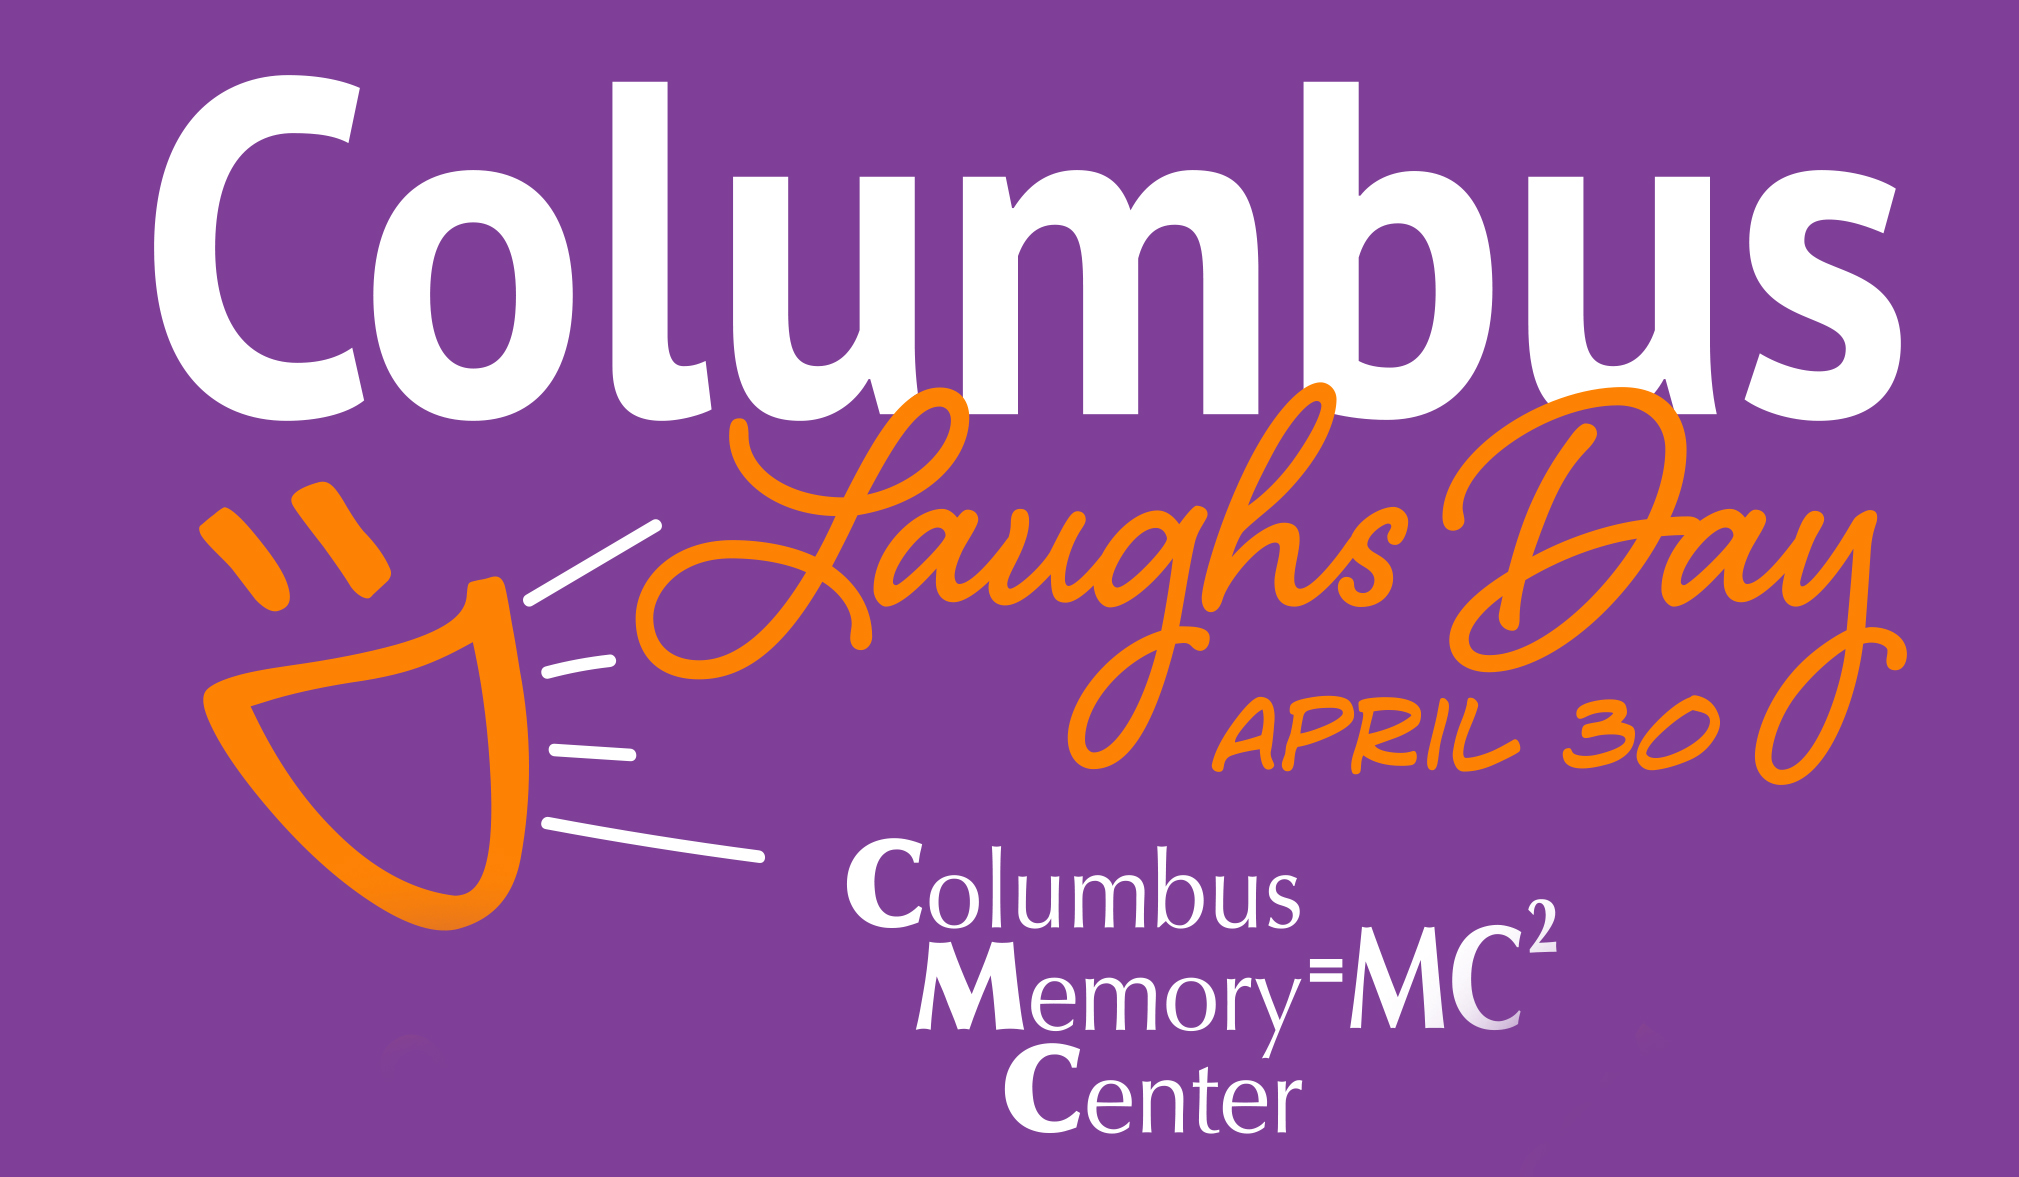 Columbus Laughs Day